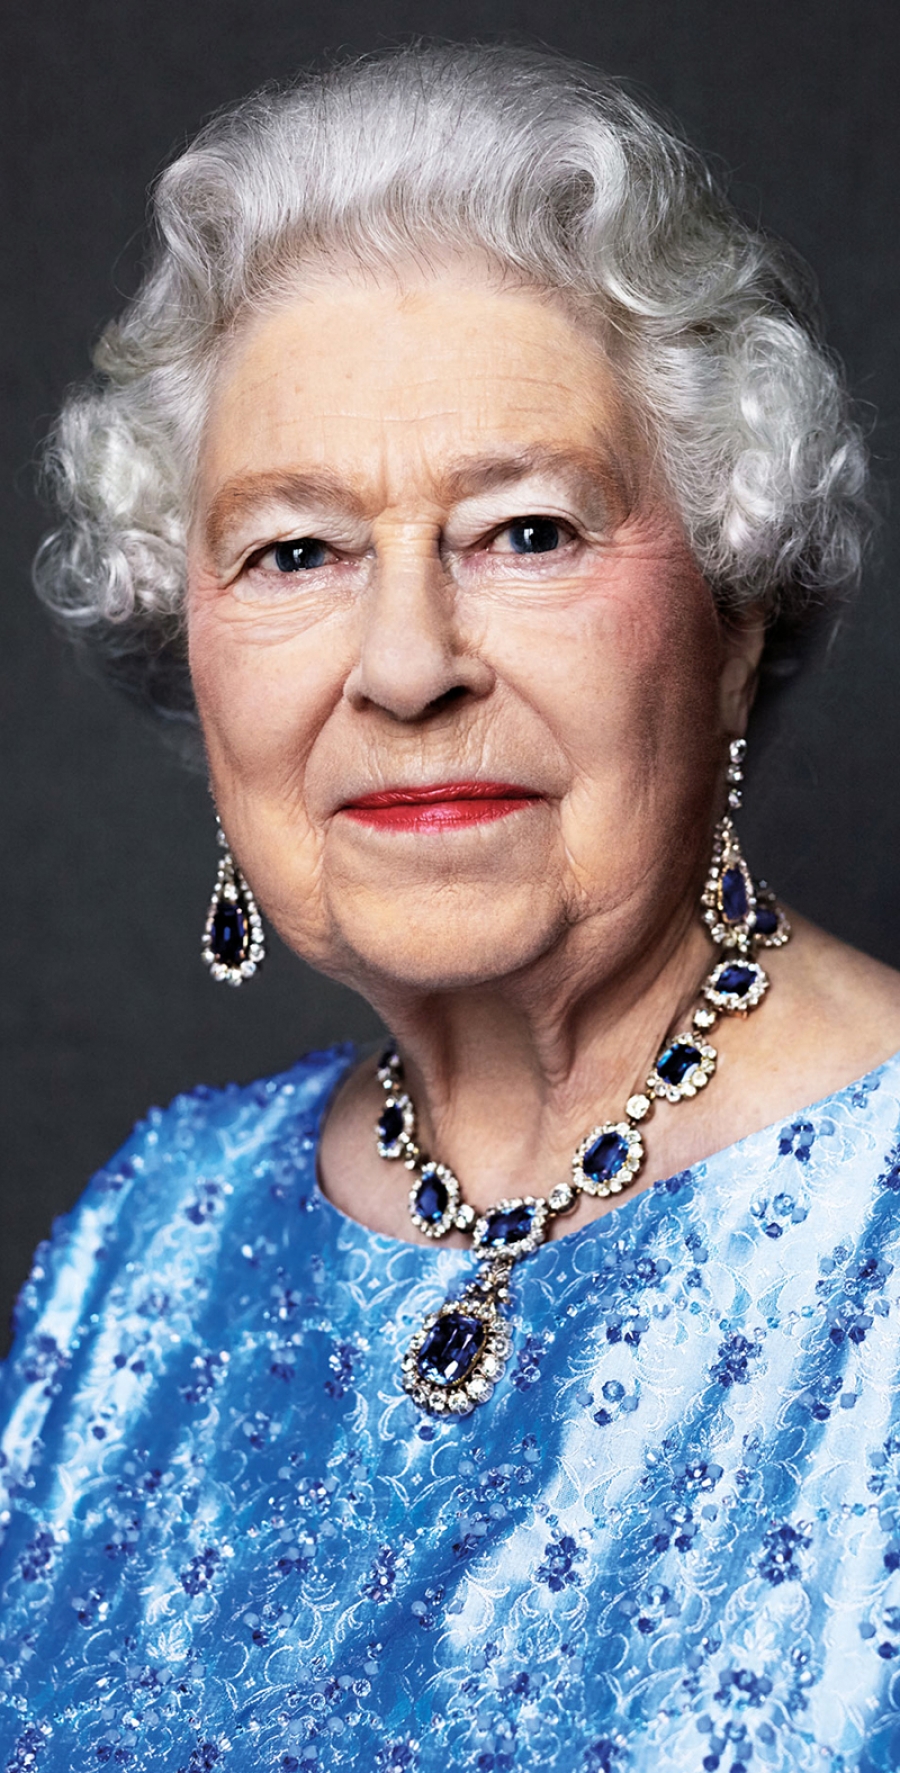 ‘Dear Queen Elizabeth, would you please help us out…’